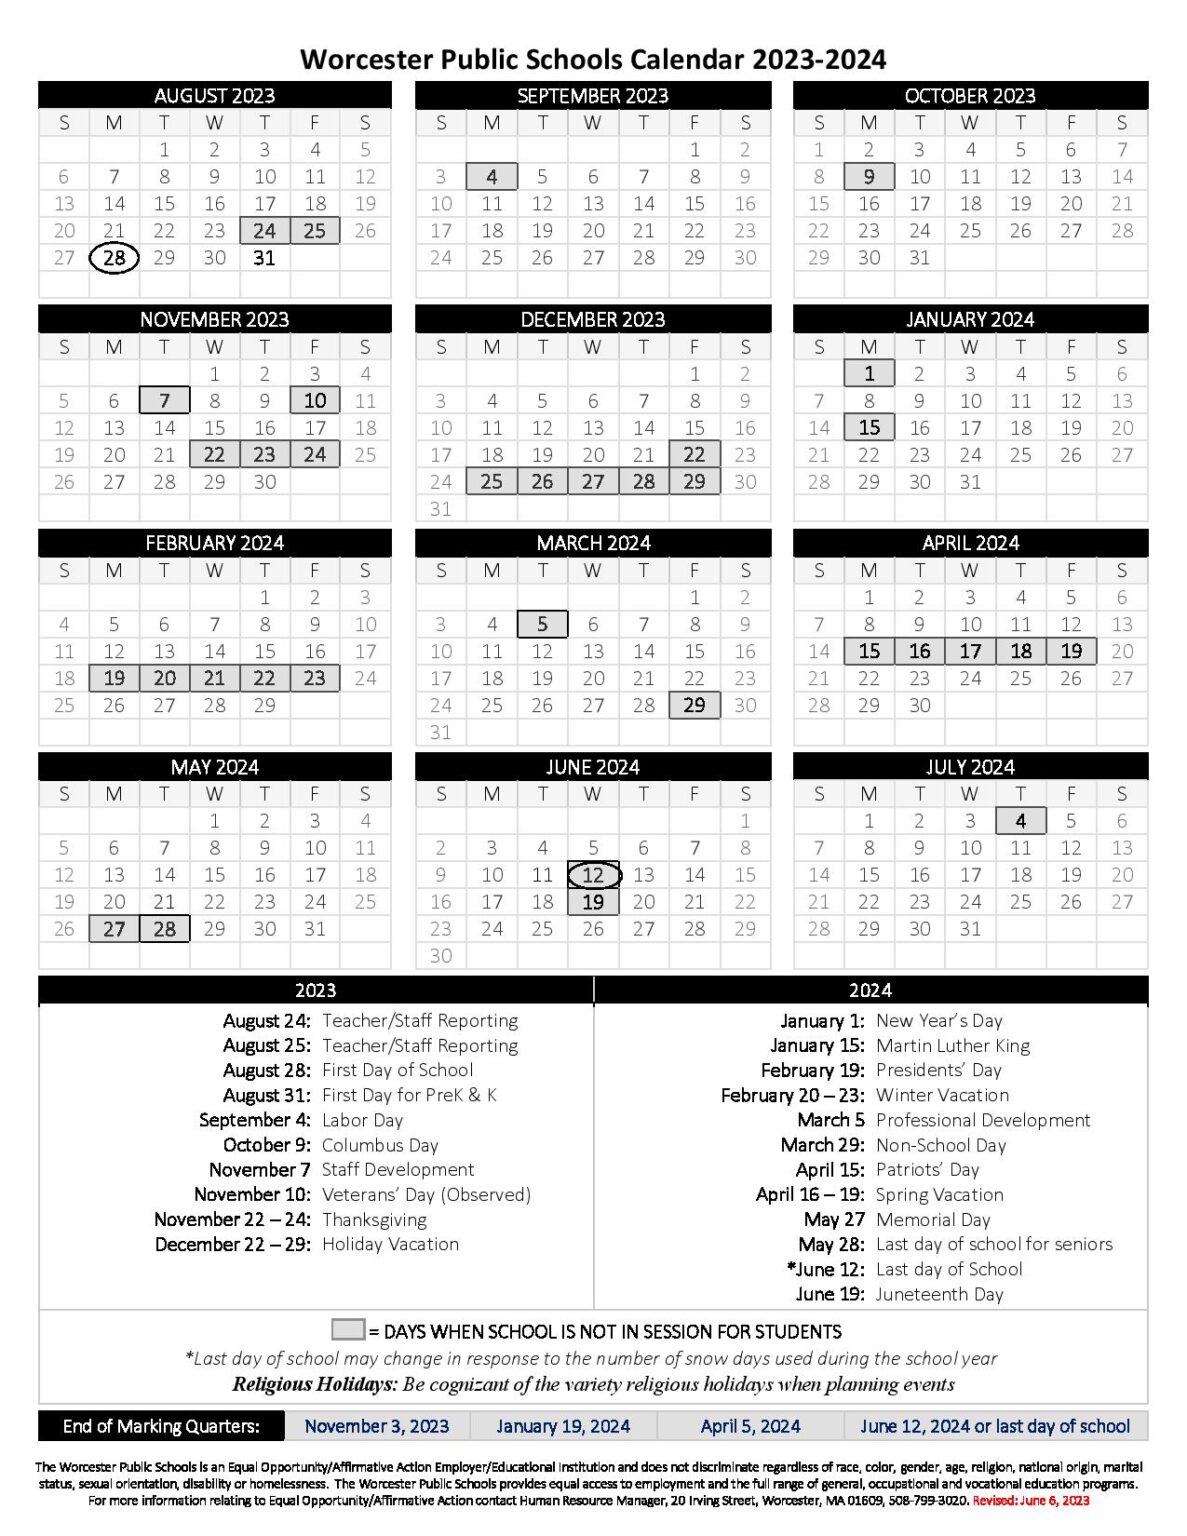 Worcester Public Schools Calendar 20232024 in PDF